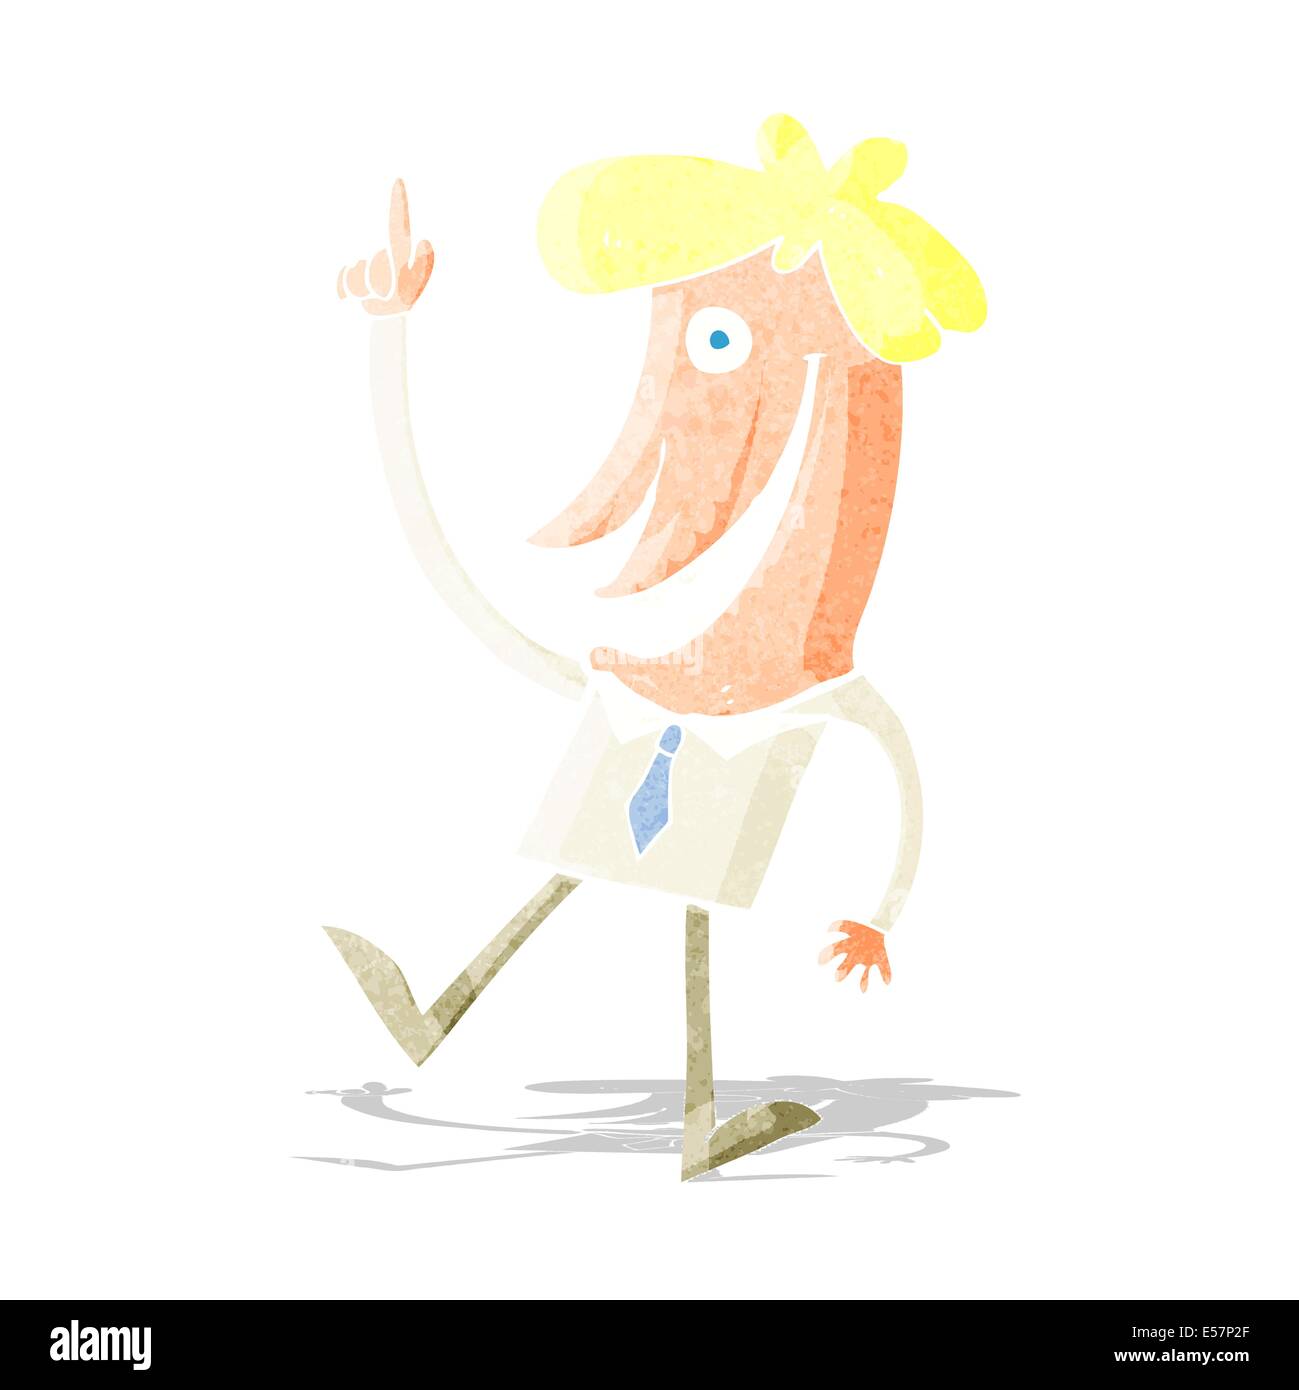 Vector illustration of Crazy man cartoon Stock Vector Image & Art - Alamy